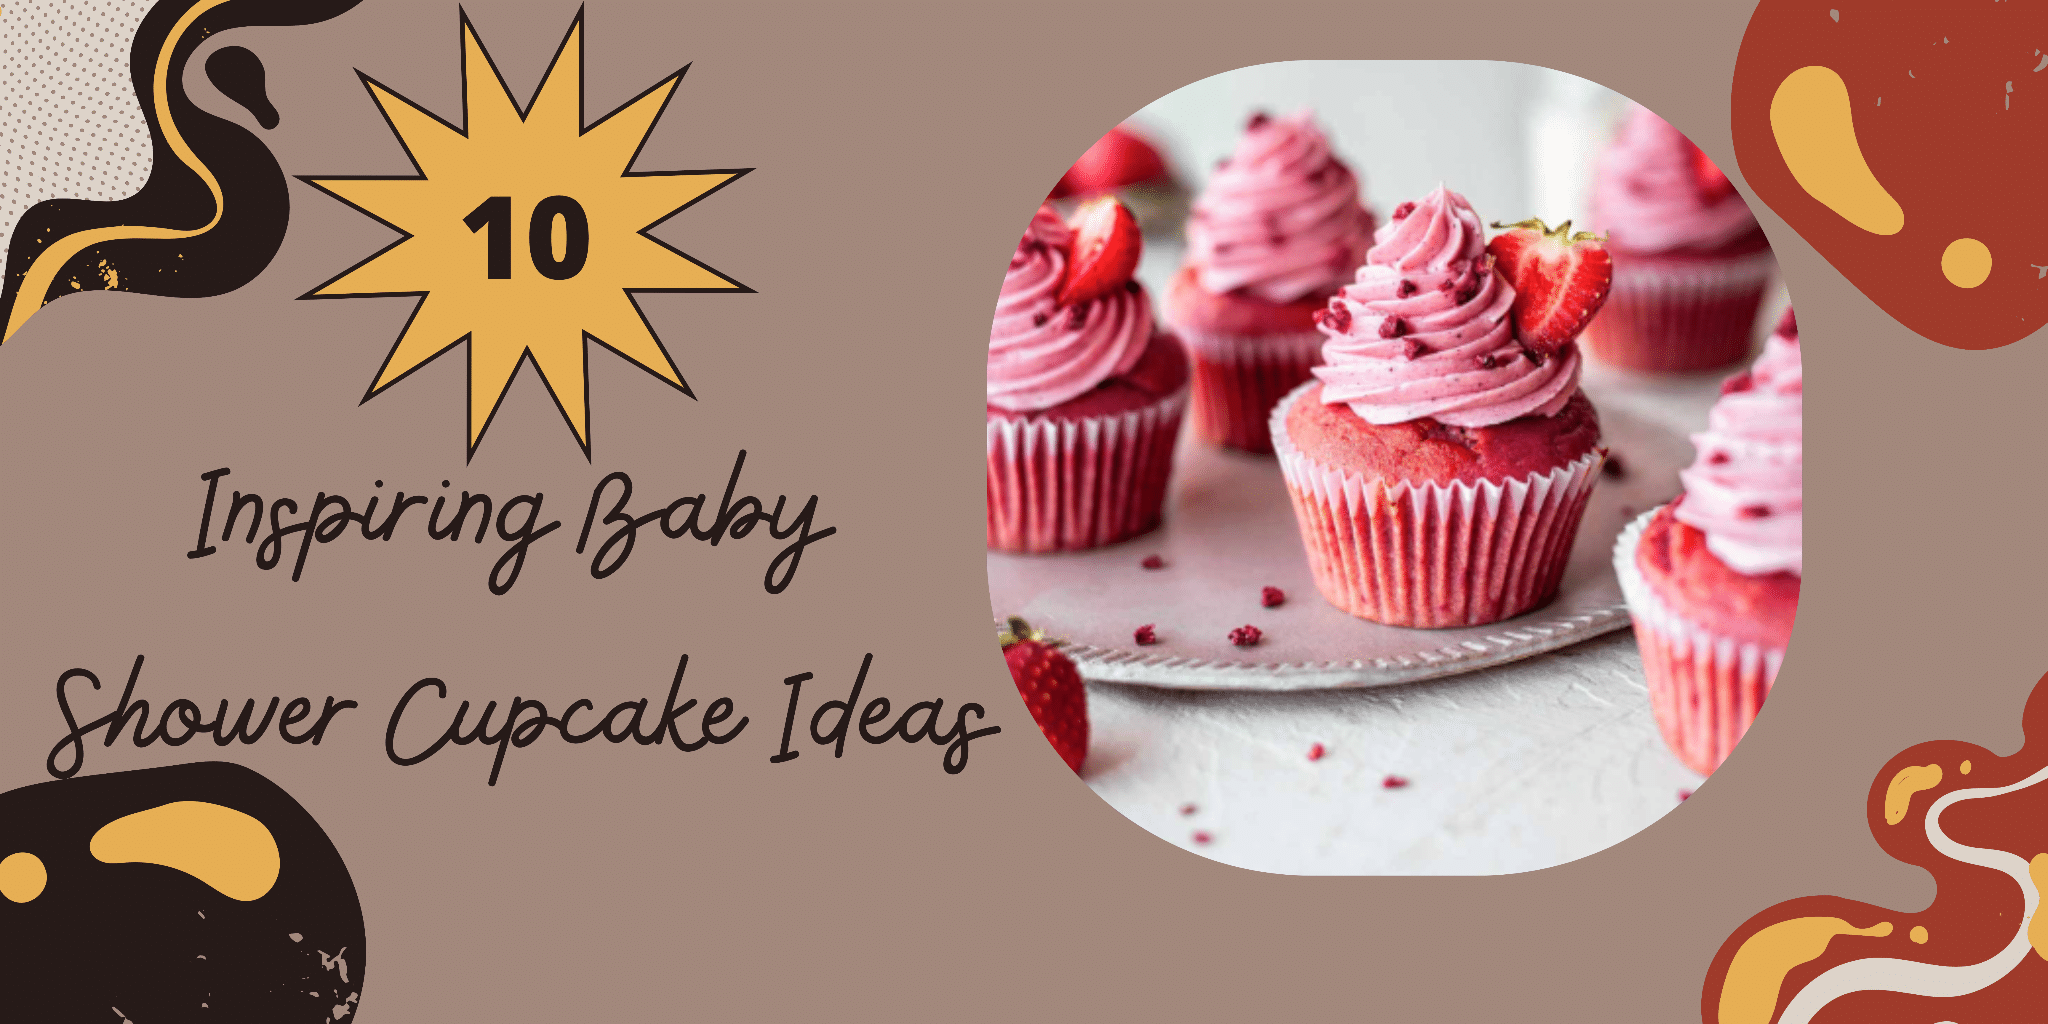 10 Inspiring Baby Shower Cupcake Ideas